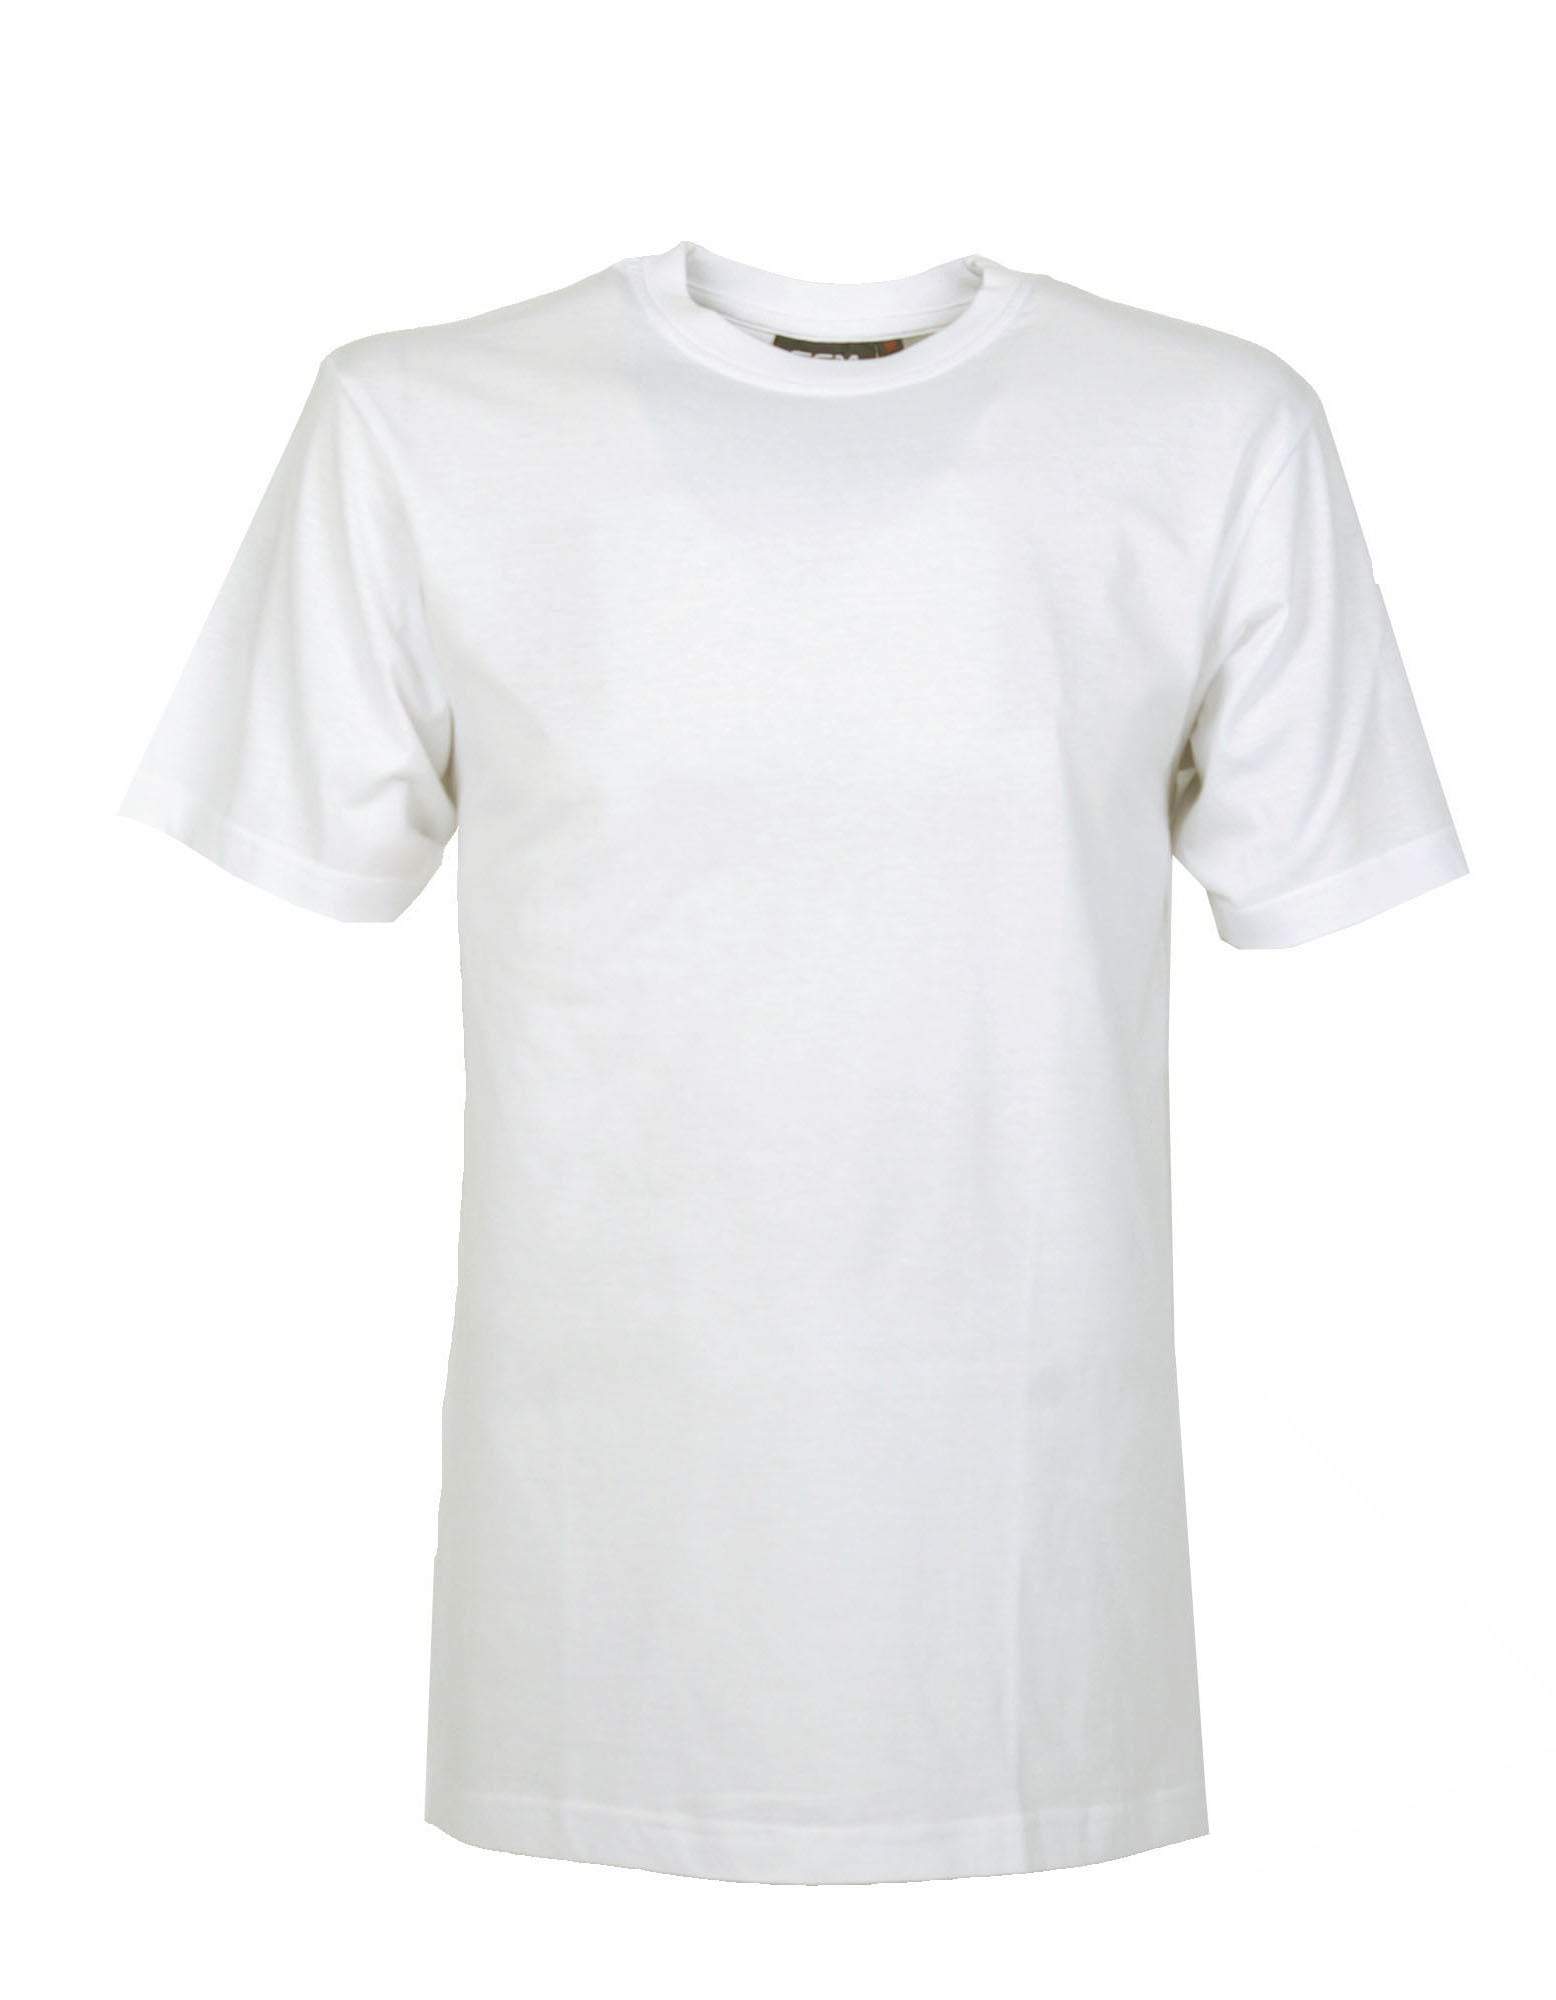 Edele komedie Profeet GCM original t-shirt ronde hals wit